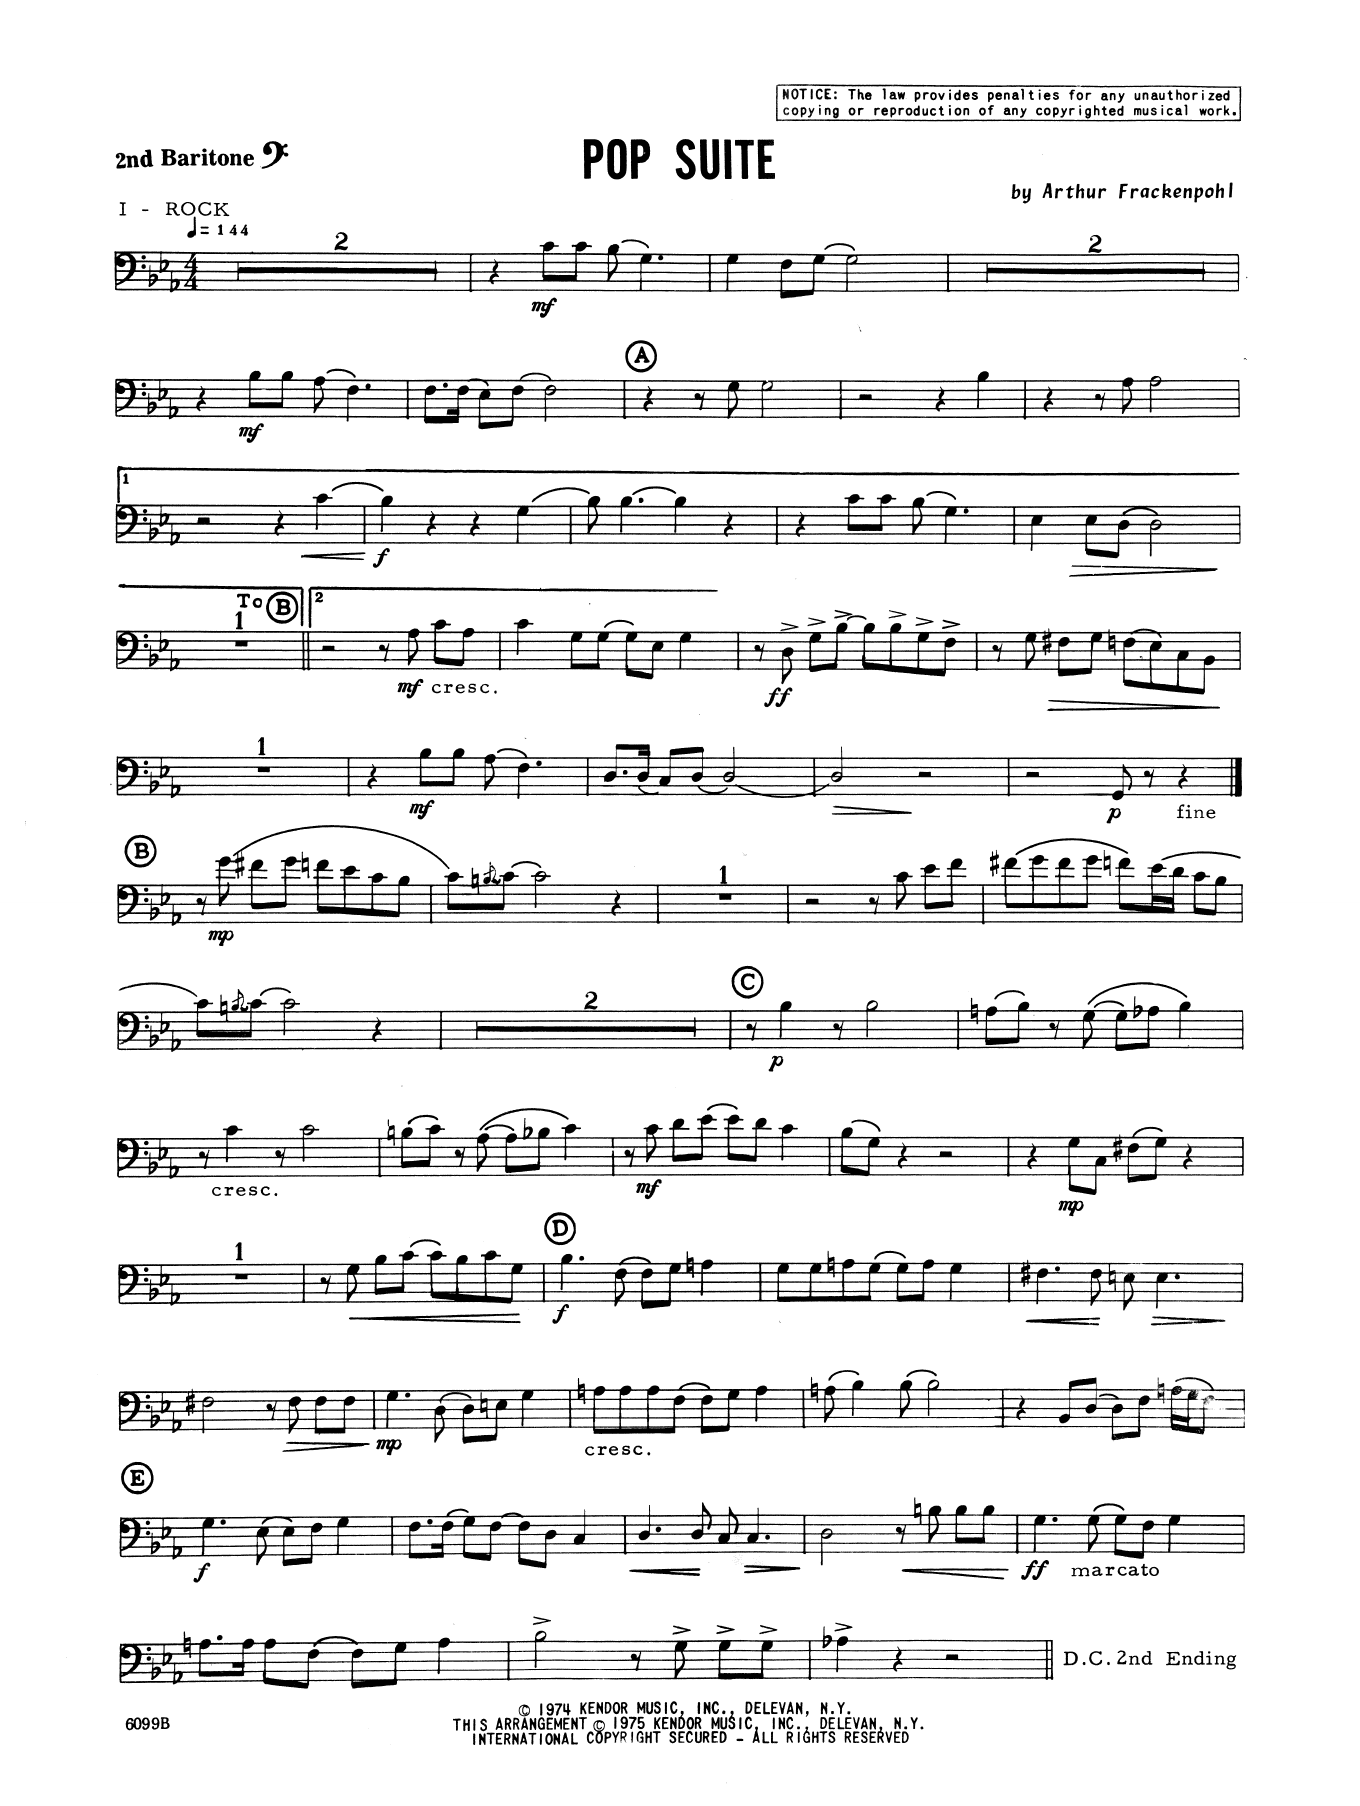 Download Arthur Frackenpohl Pop Suite - 2nd Baritone B.C. Sheet Music